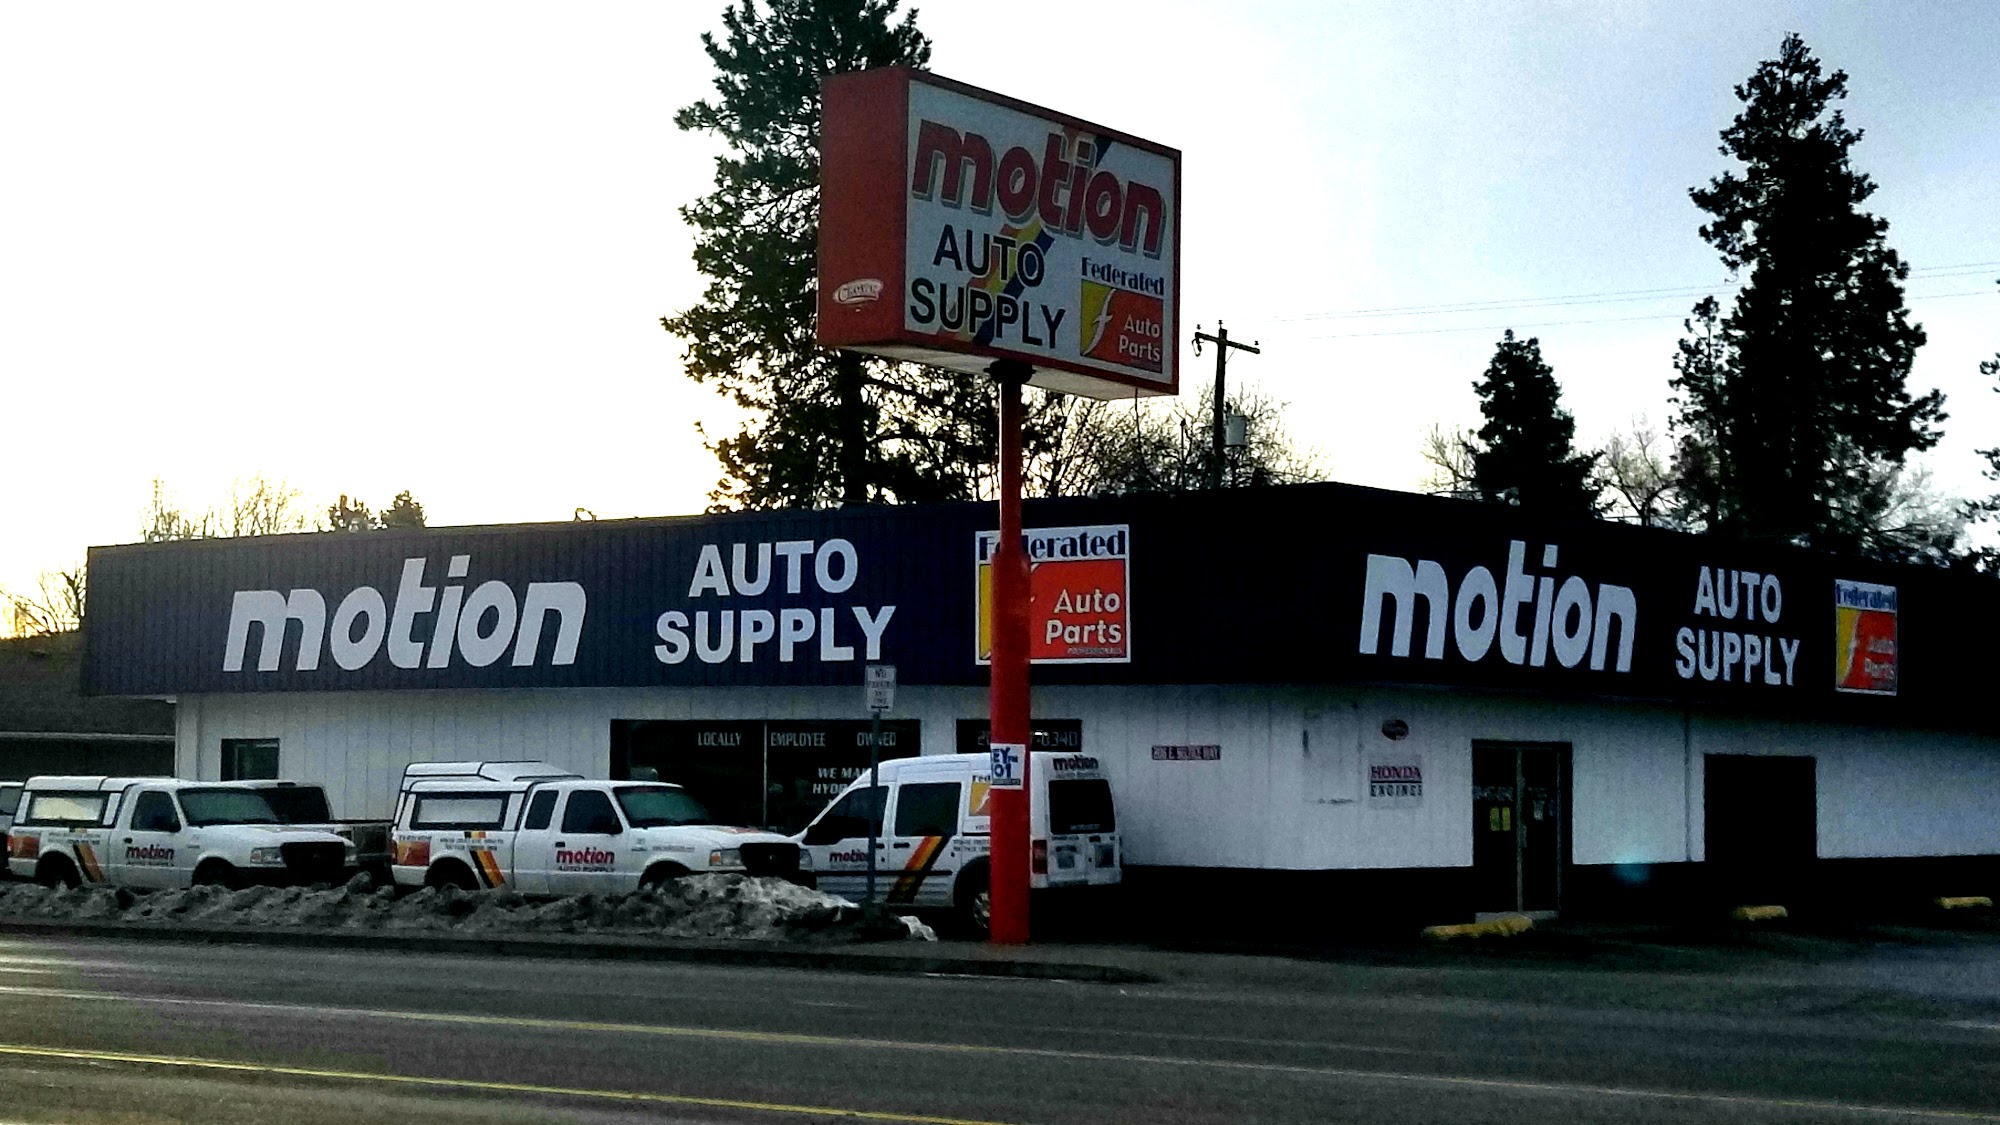 Motion Auto Supply